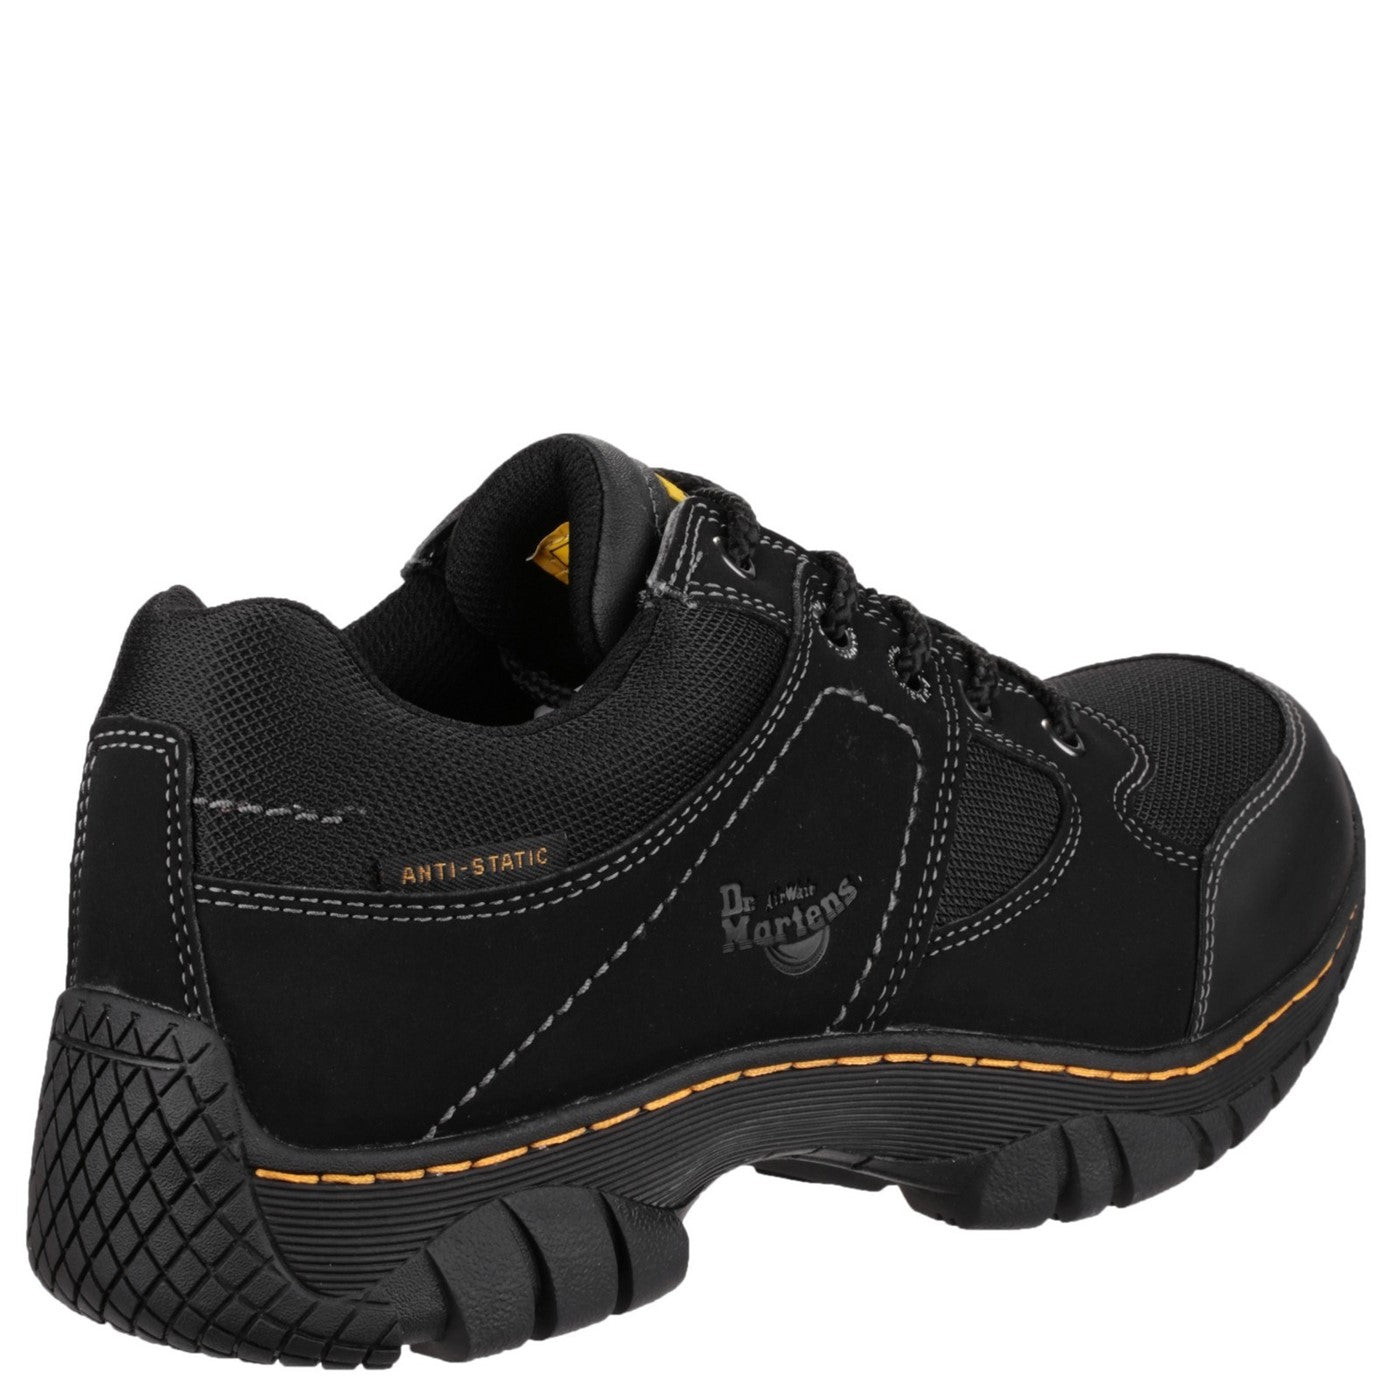 Unisex Dr Martens Gunaldo Safety Shoe